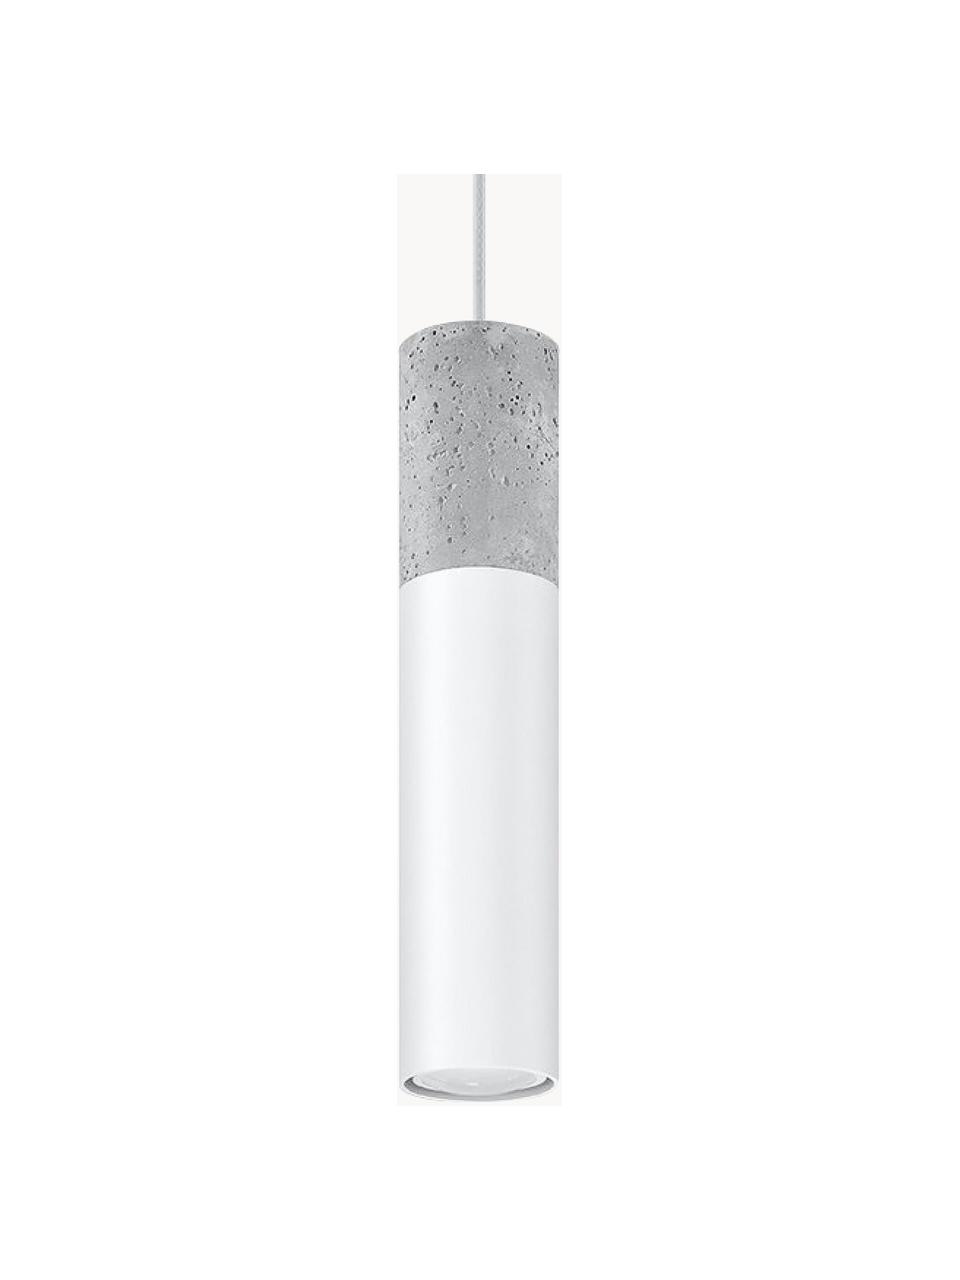 Malé závěsné svítidlo z betonu Edo, Šedá, bílá, Ø 6 cm, V 30 cm